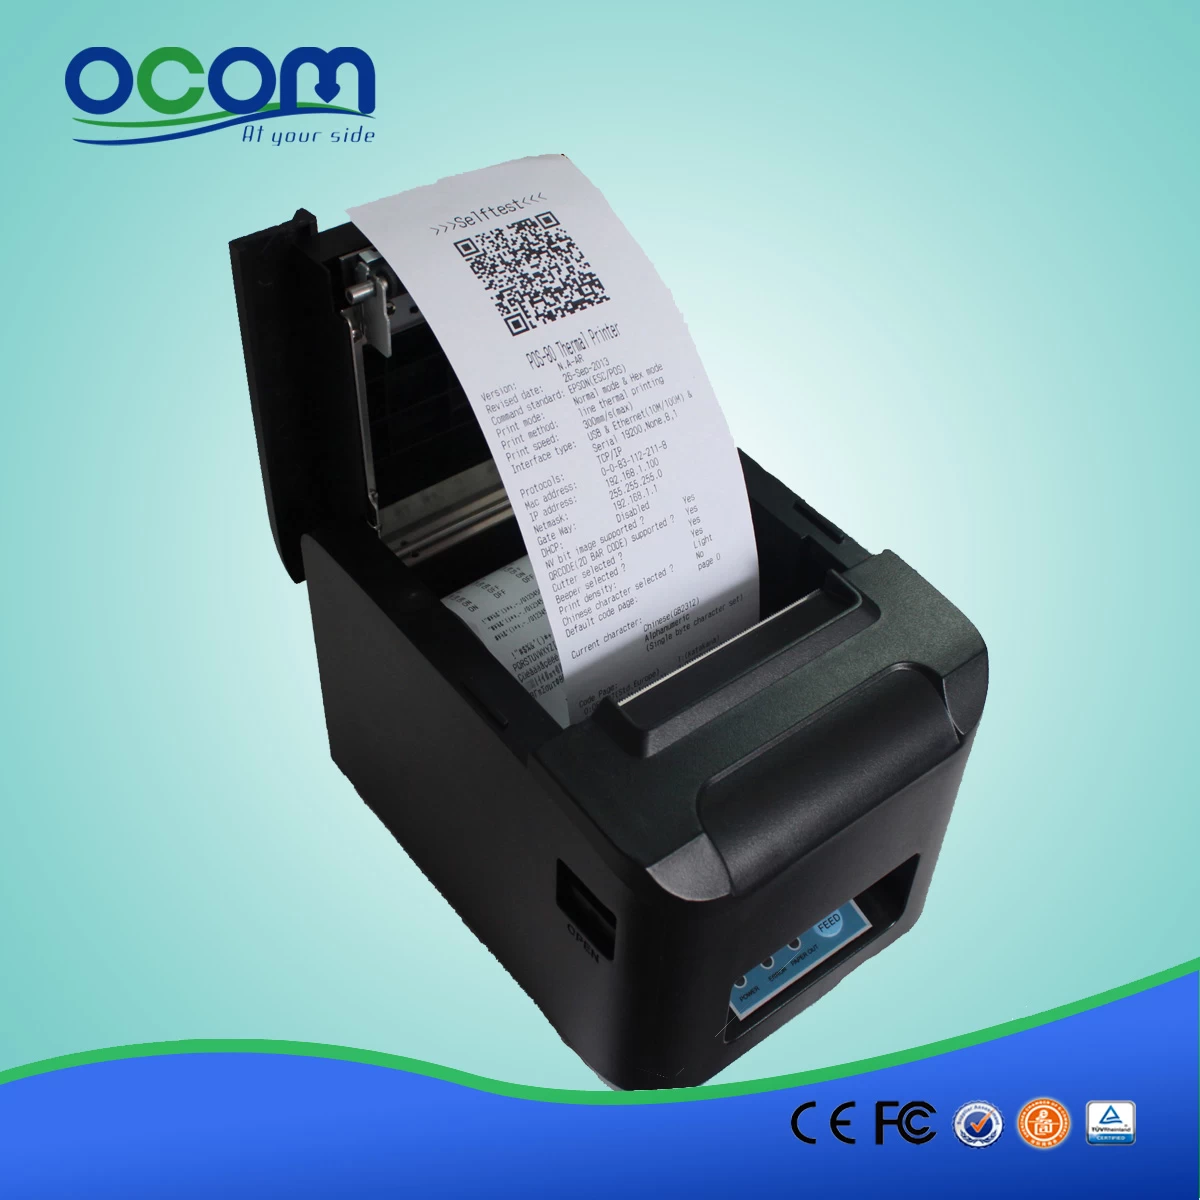 80mm high speed WIFI POS receipt printer-OCPP-808-W